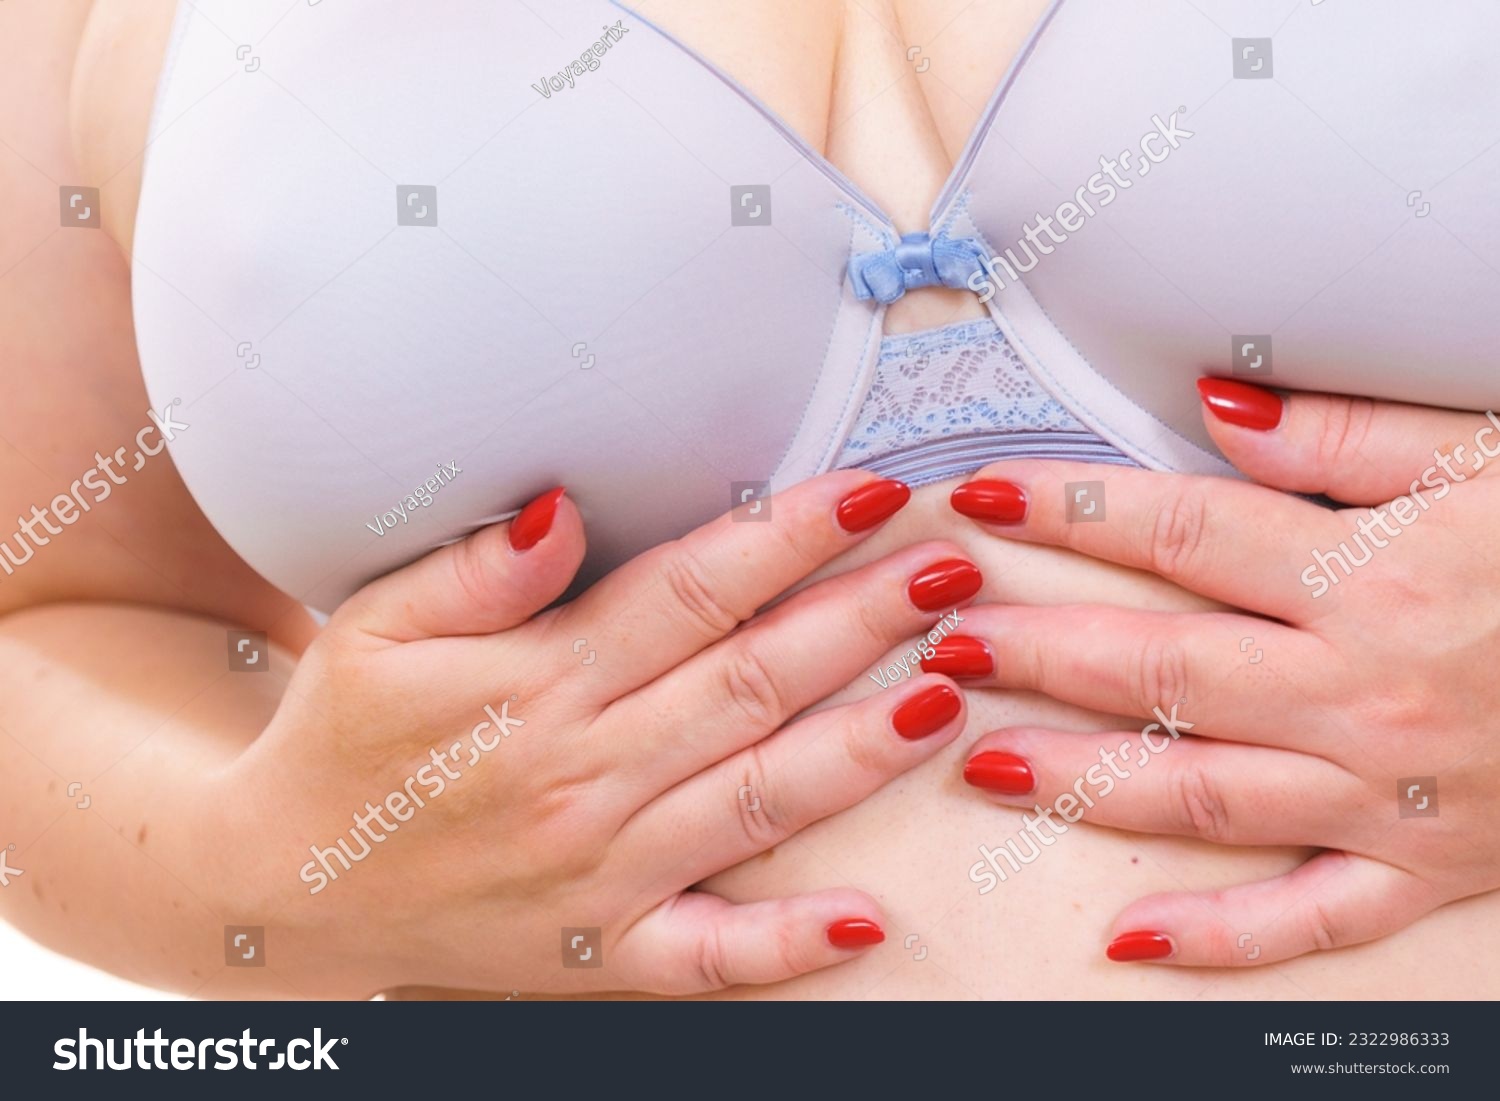 amanda snookie share fat mature huge tits photos